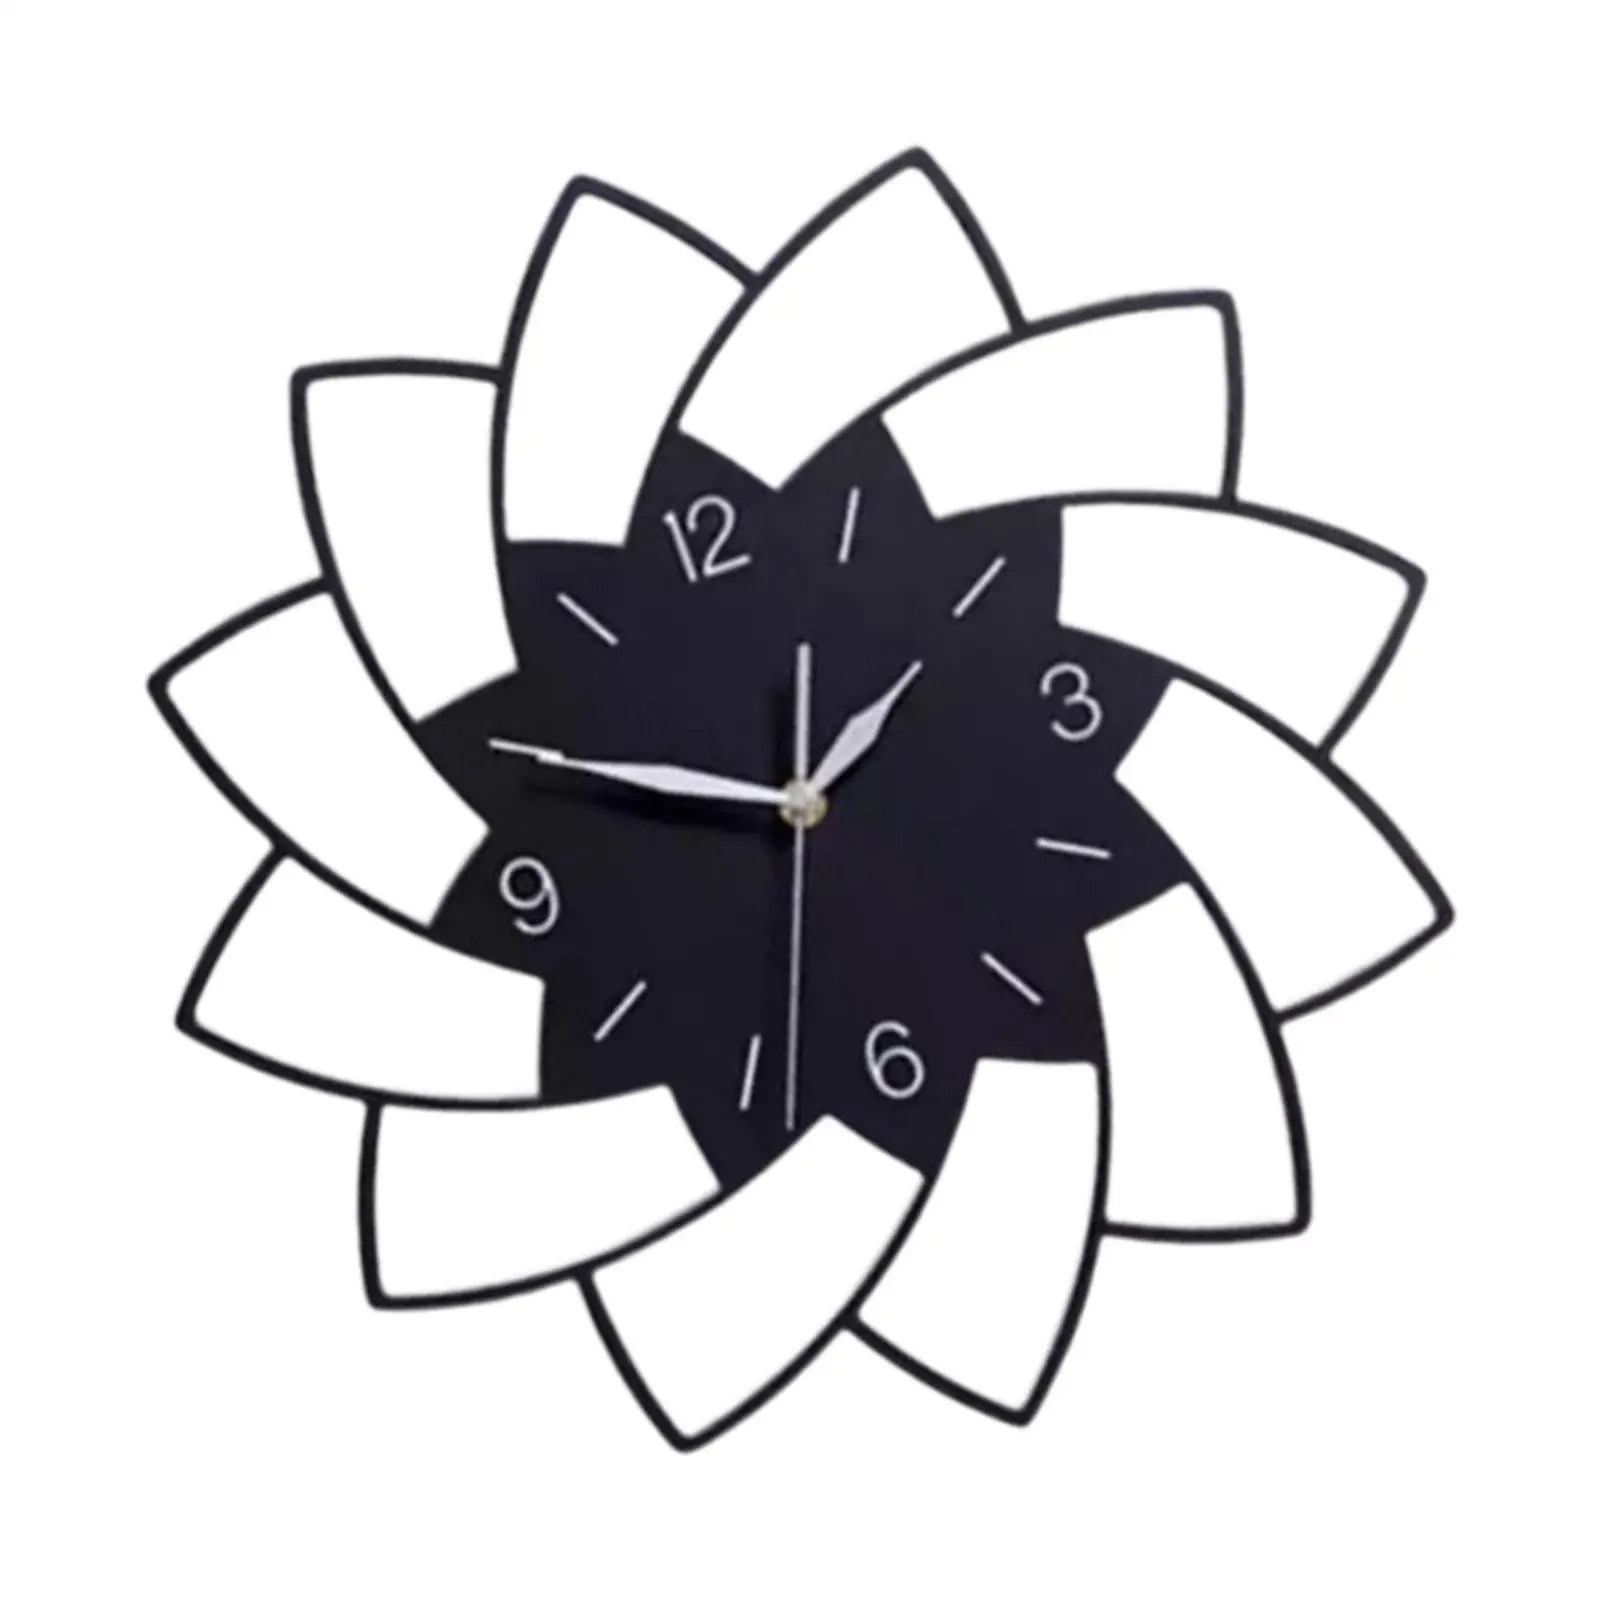 Acrylic Wall Clock Big Wall Clock Creative Silent 12`` Flower Shaped Decorative Wall Clocks for Kitchen Bedroom Office Ornament